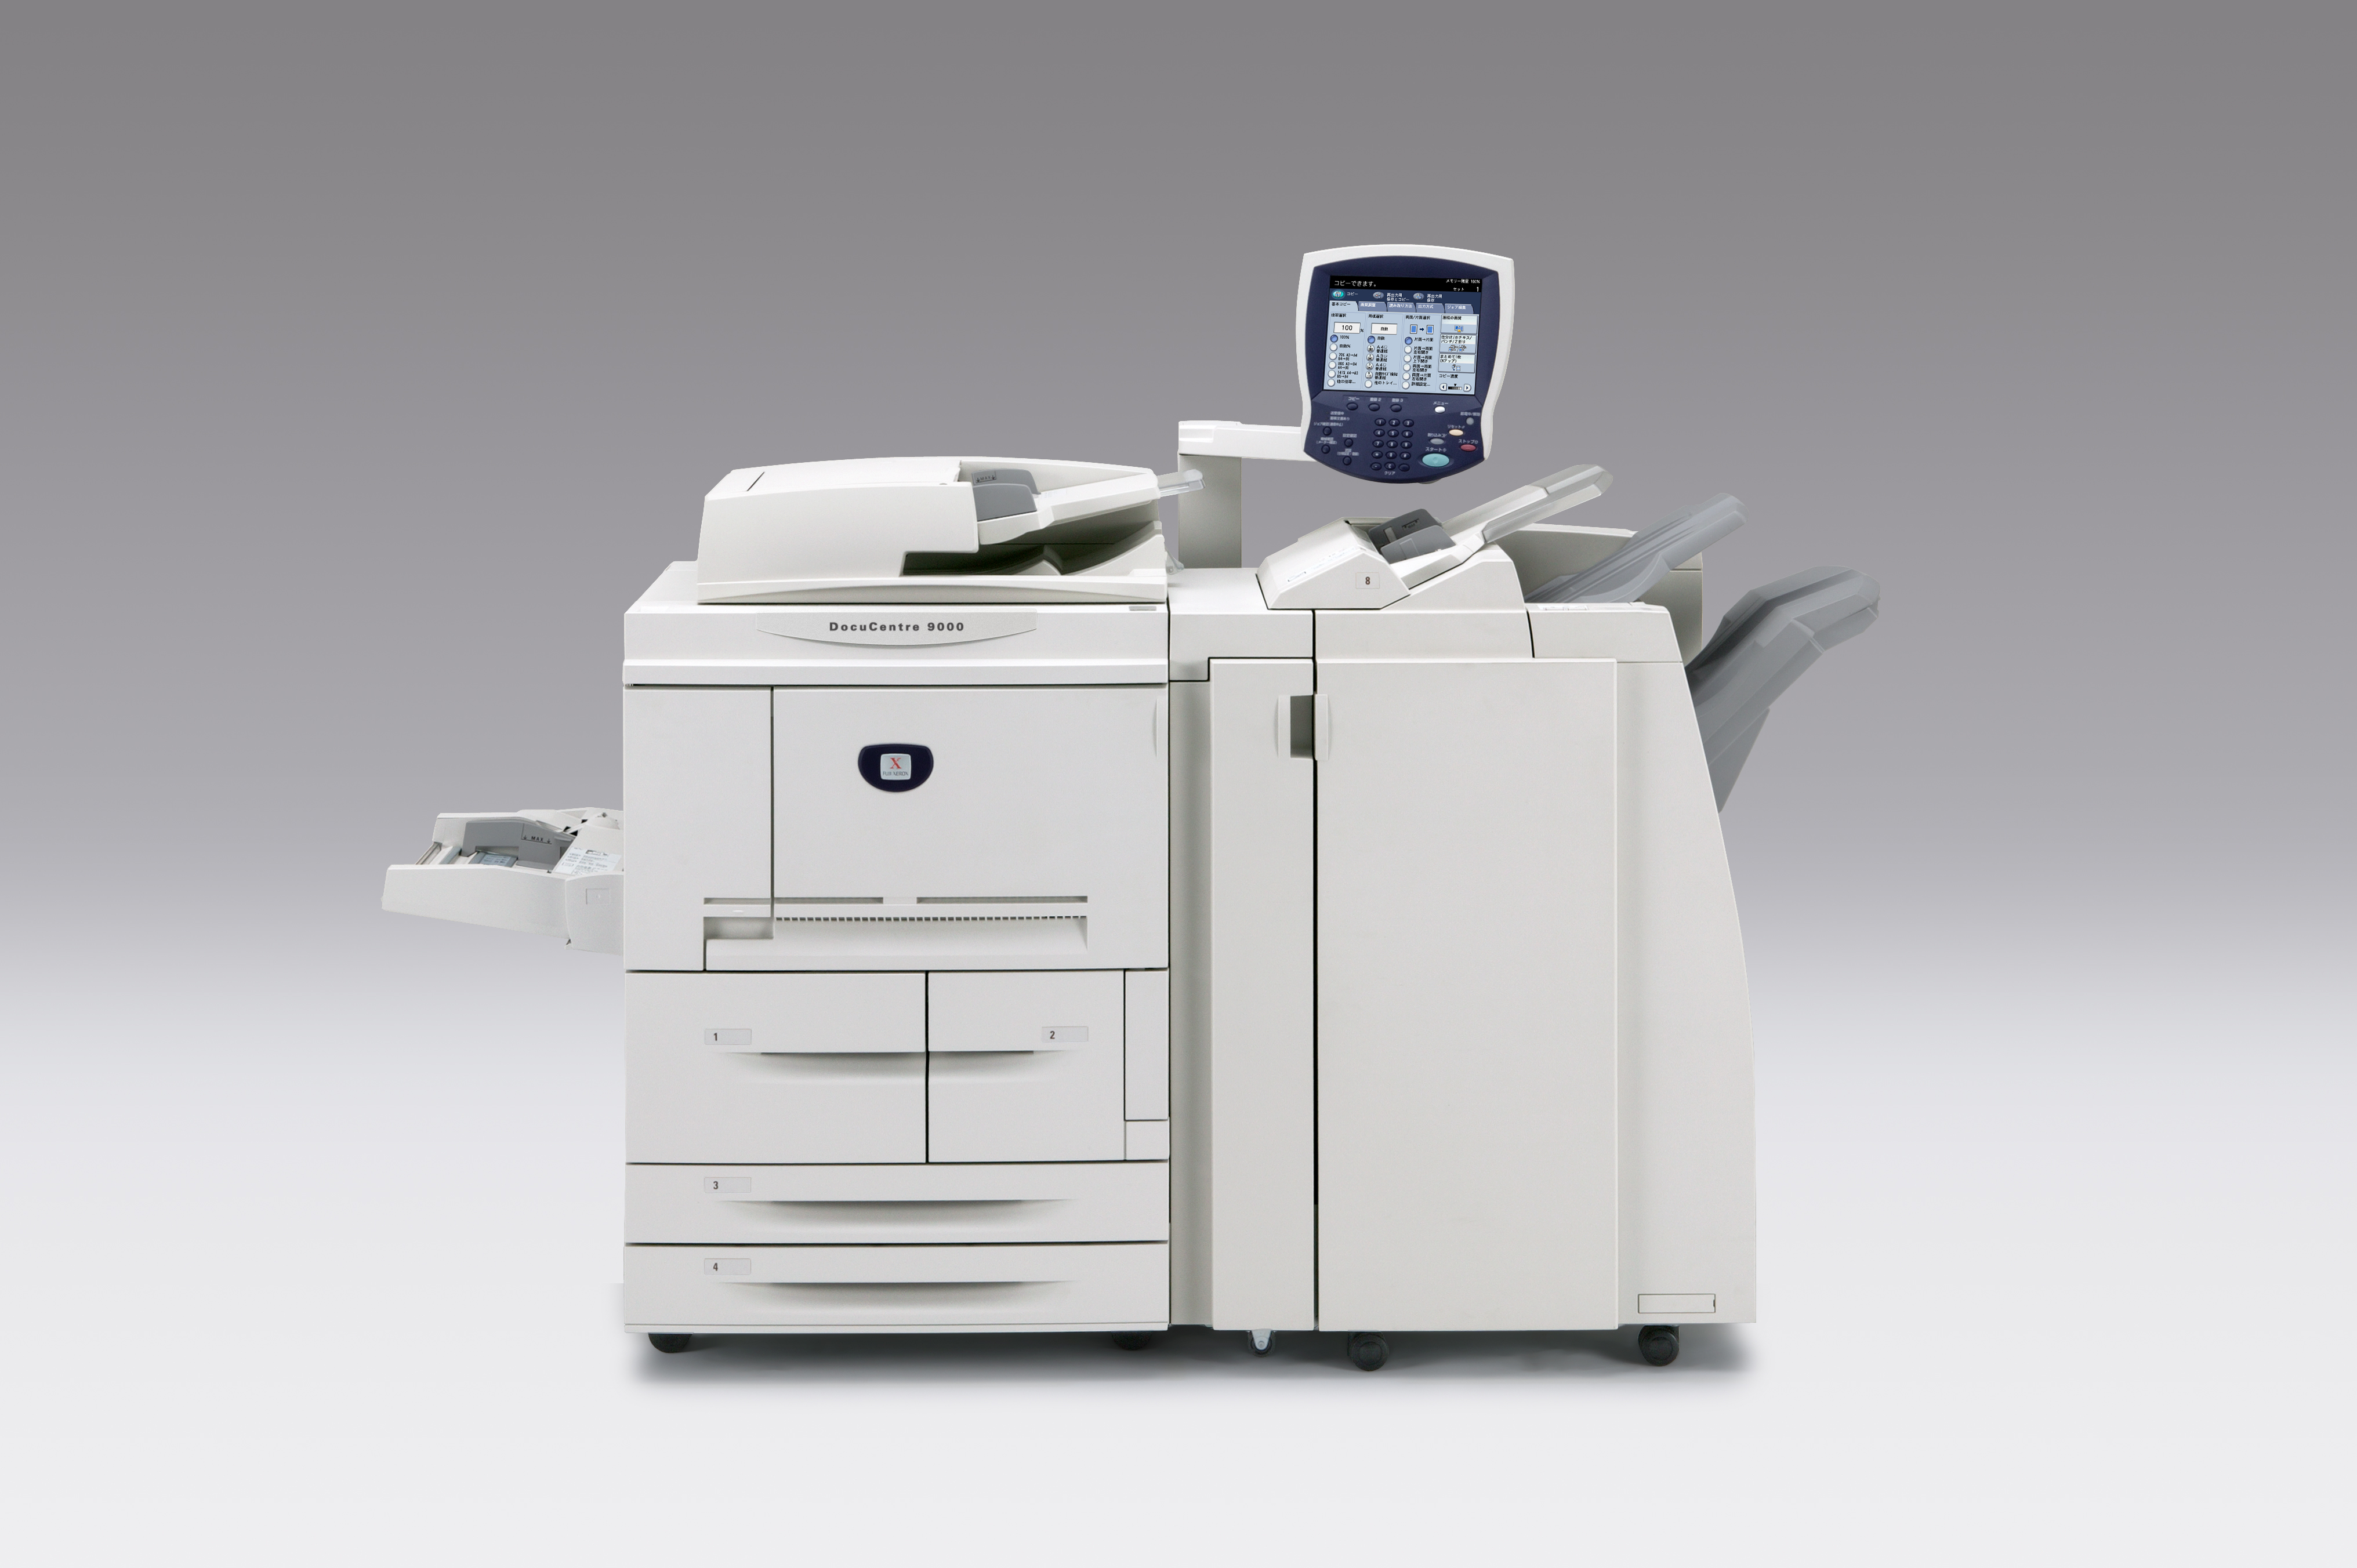 75 product. Xerox 9000. Принтер Xerox 3025. Принтер Xerox c230. Xerox 9700.